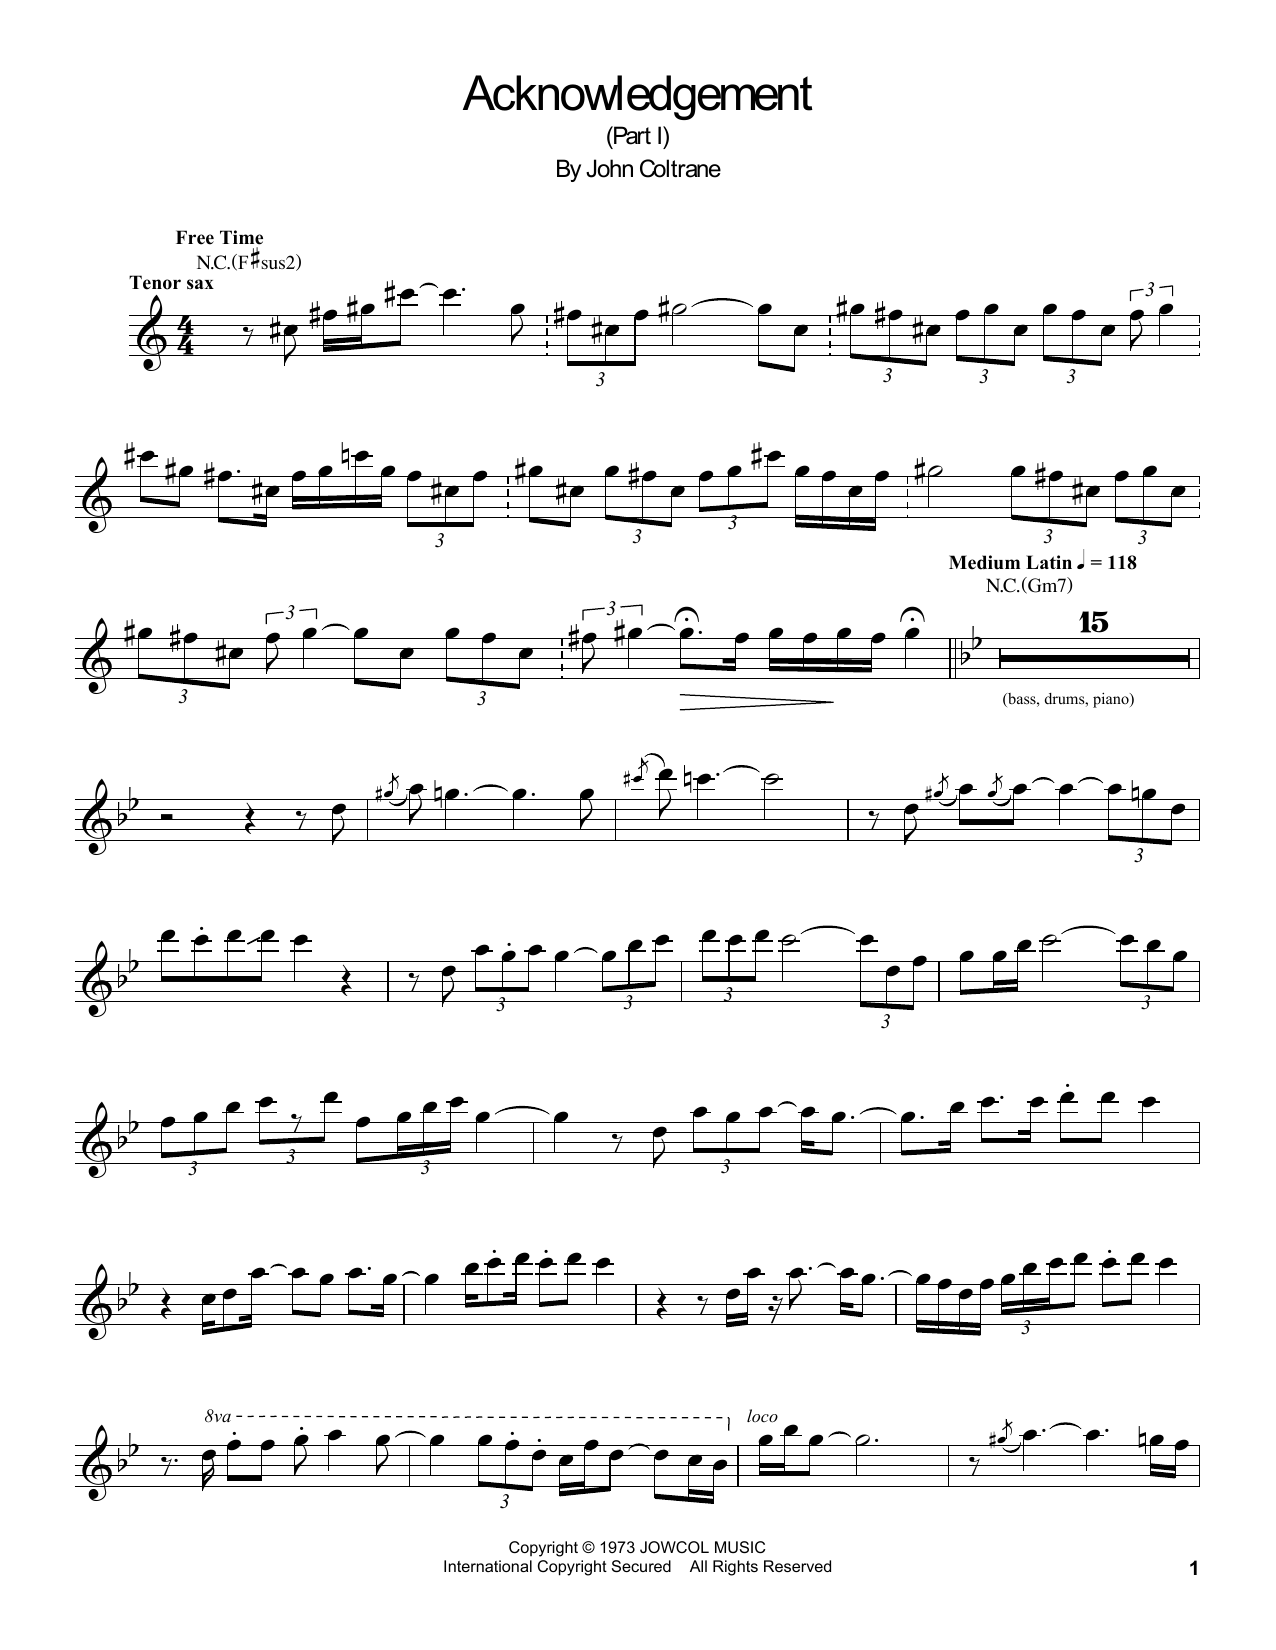 John Coltrane Acknowledgement Sheet Music Notes & Chords for Tenor Sax Transcription - Download or Print PDF